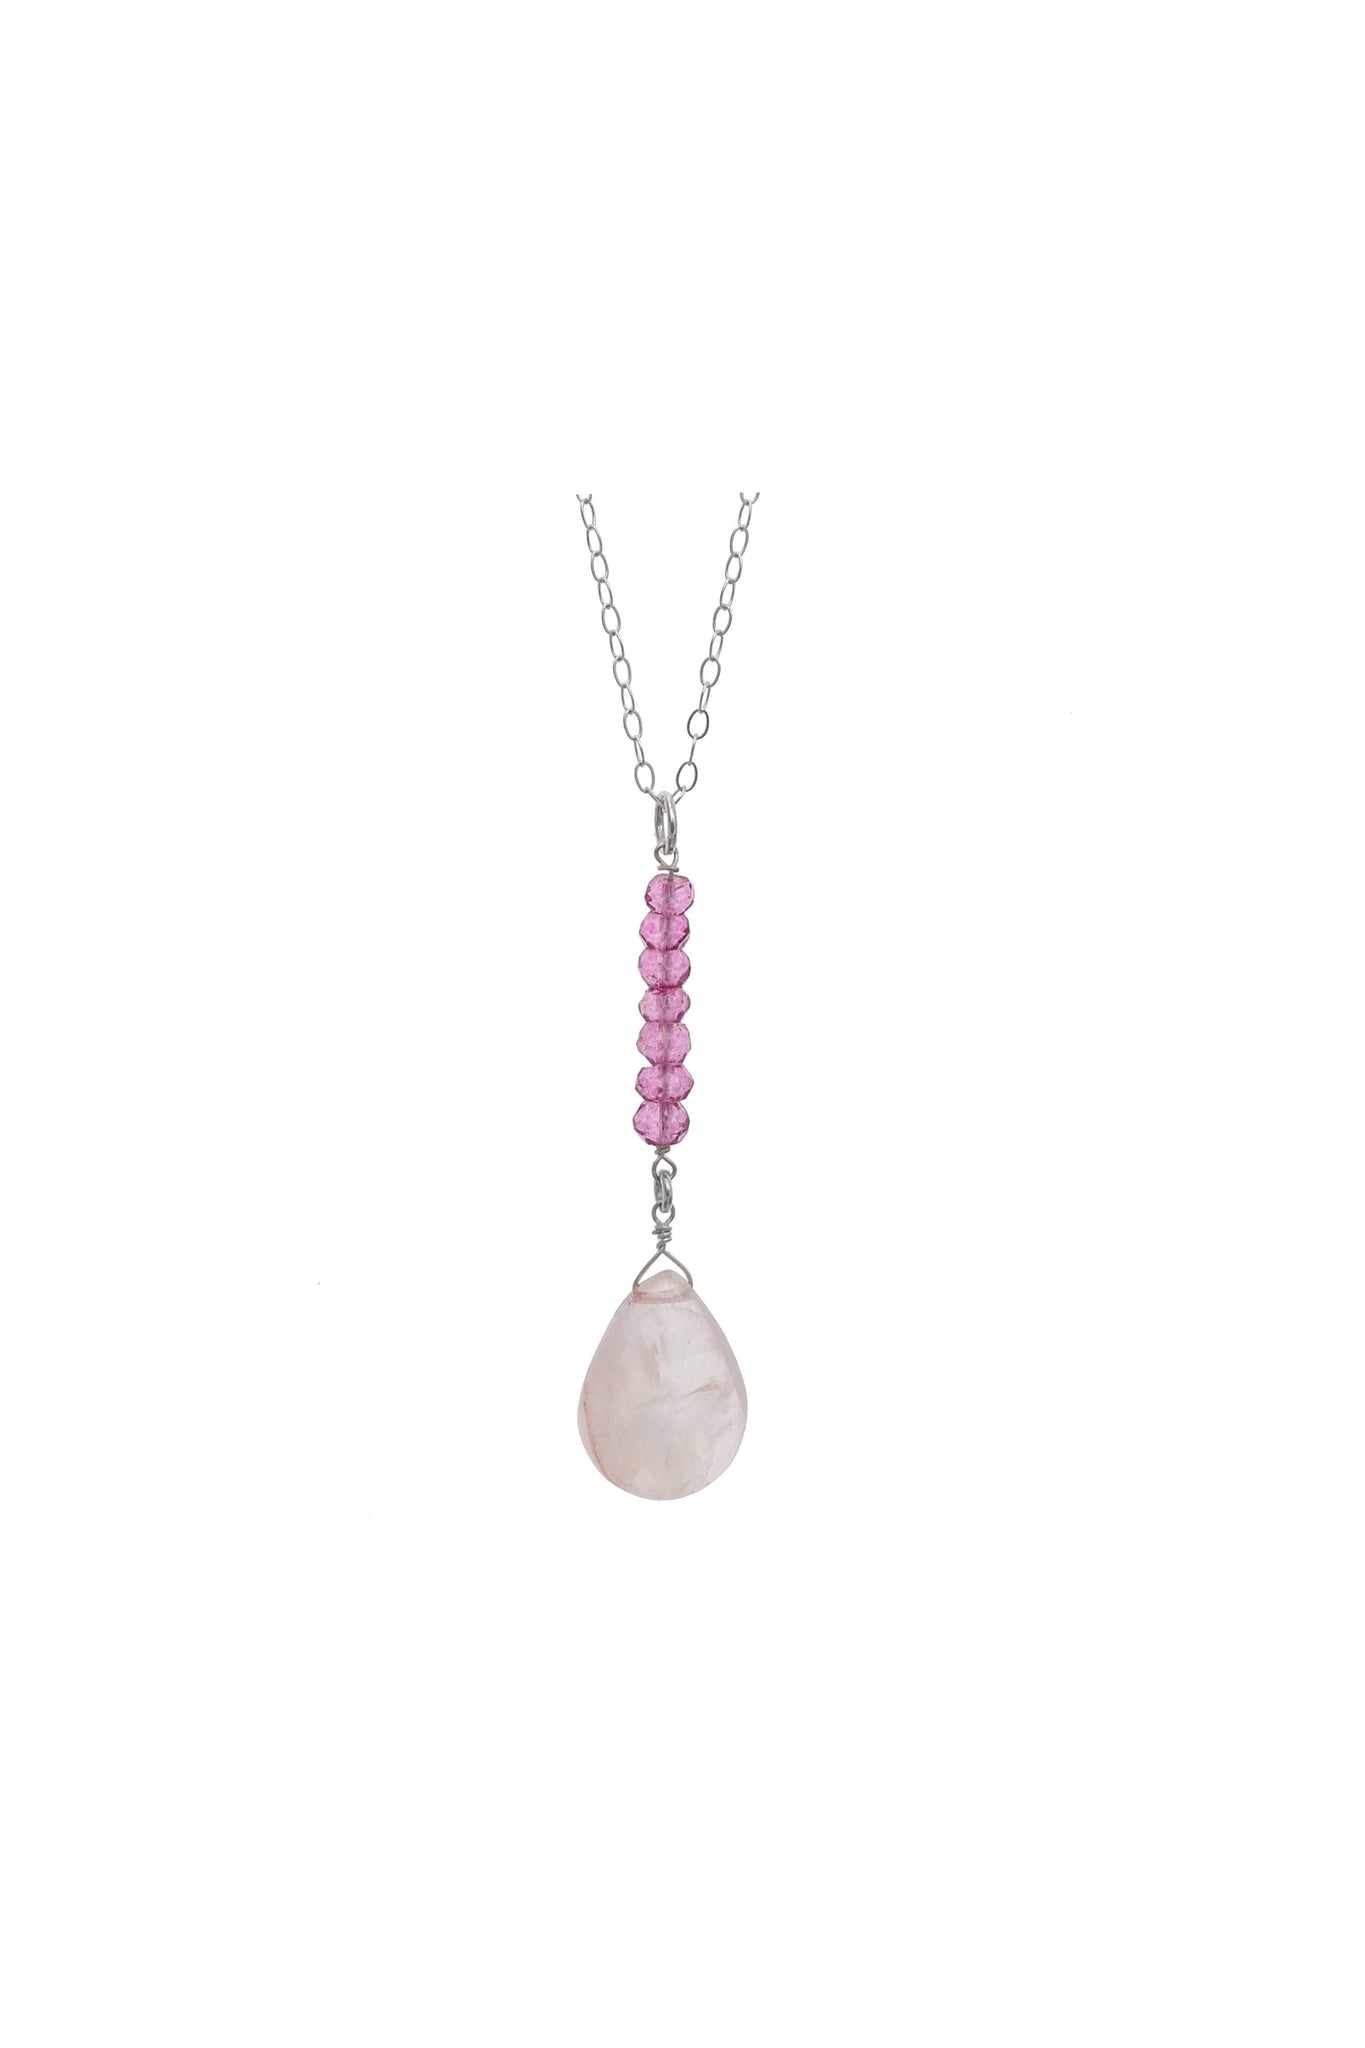 Pink, Rose Quartz Briolette Gemstone Necklace